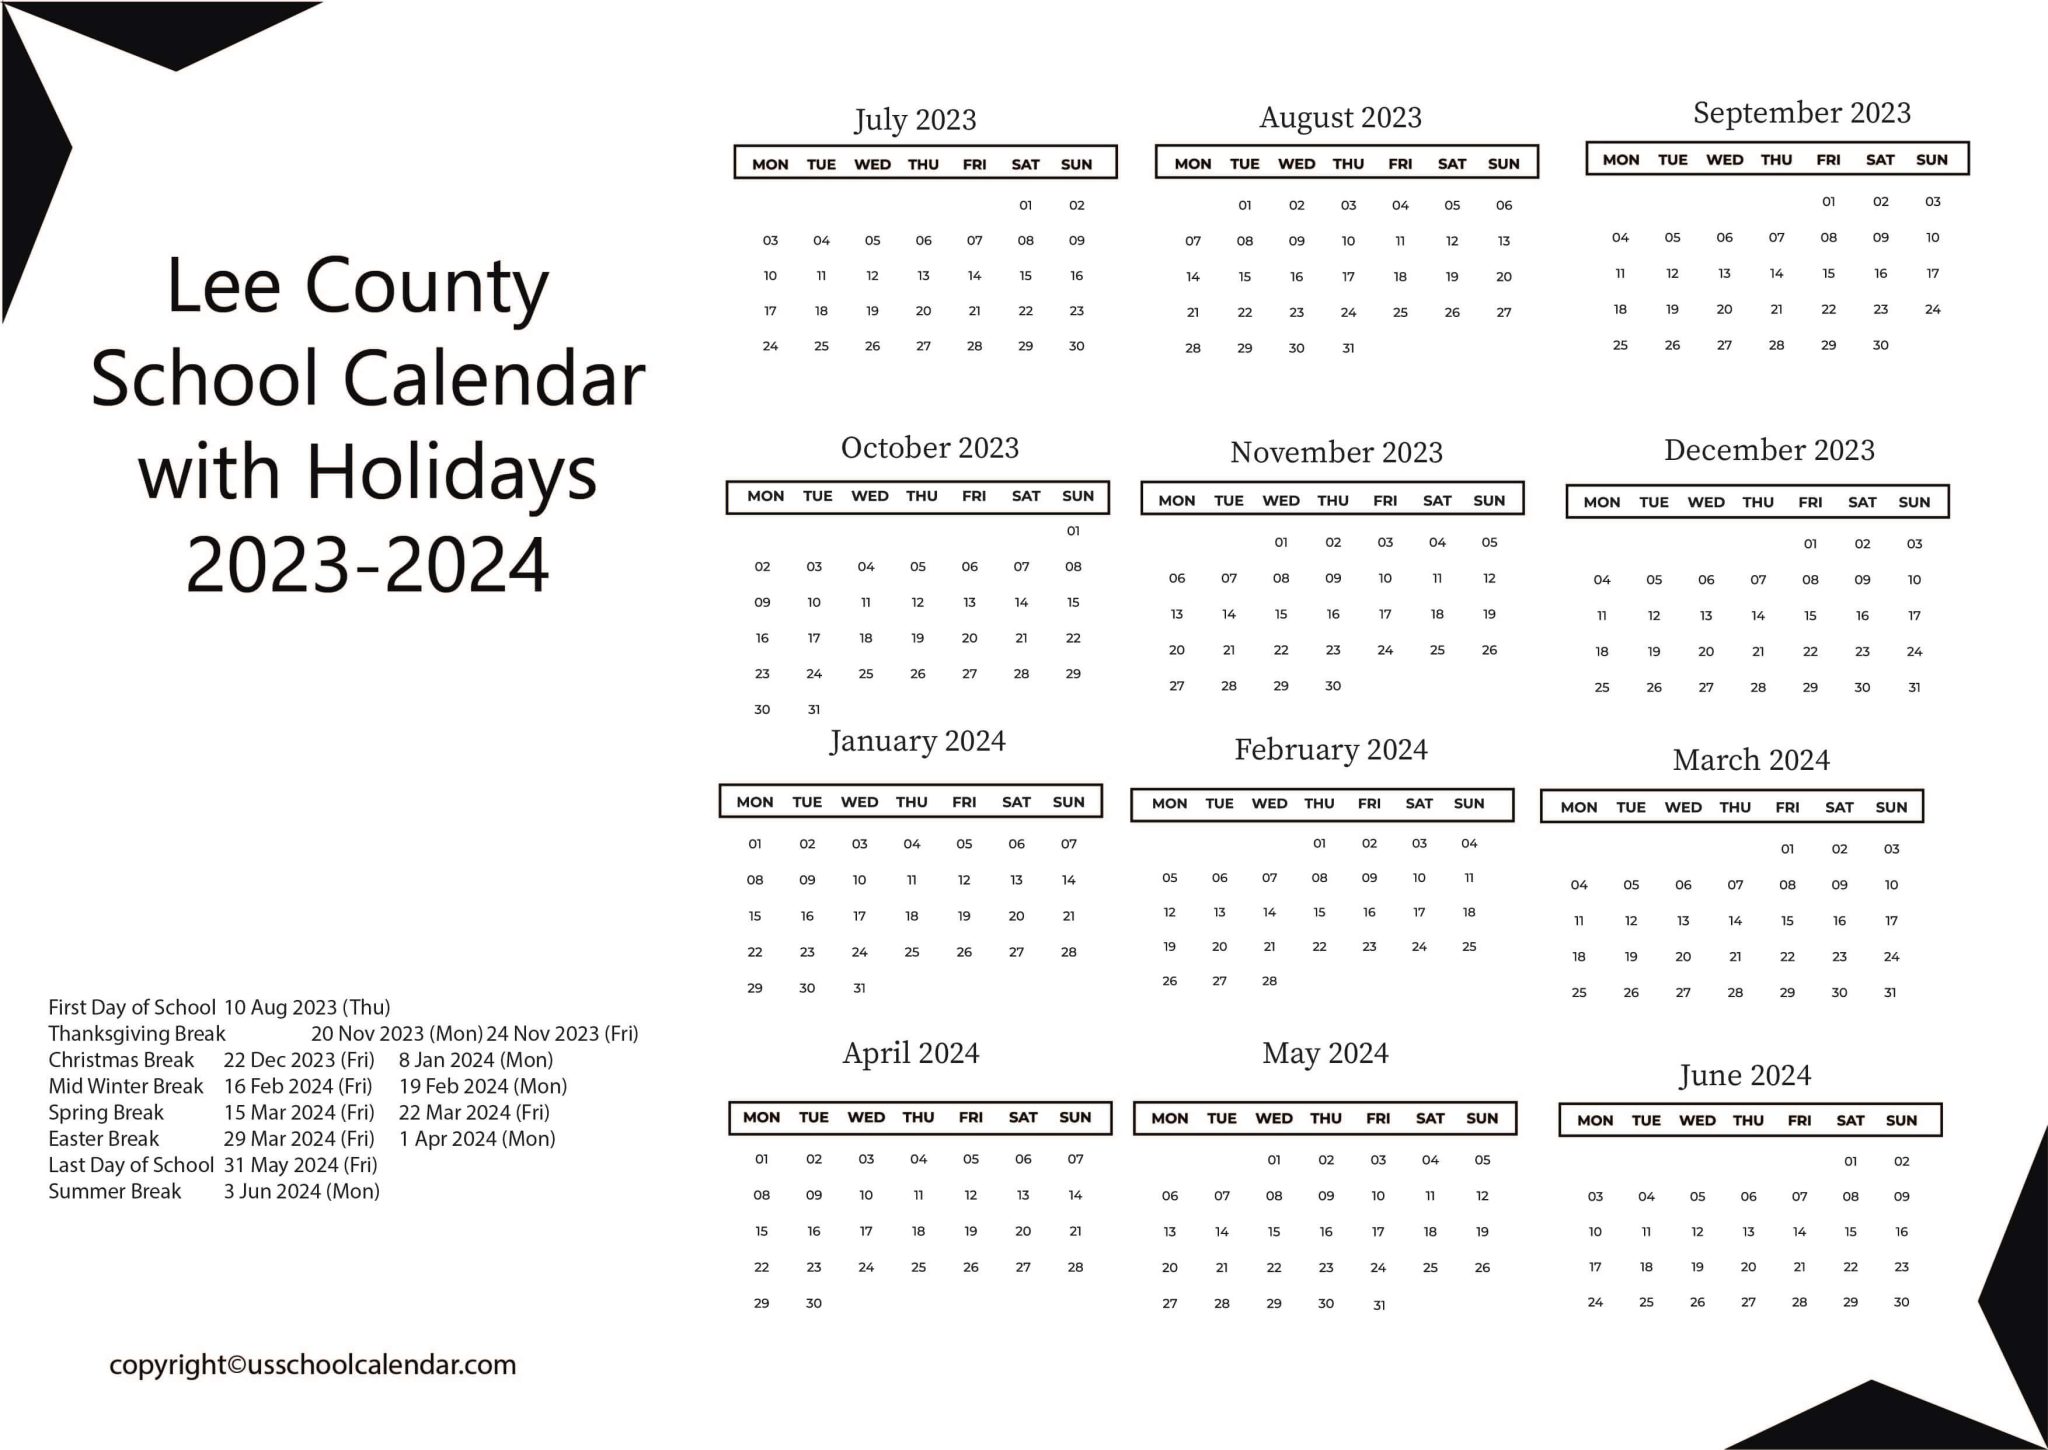 lee-county-school-calendar-with-holidays-2023-2024